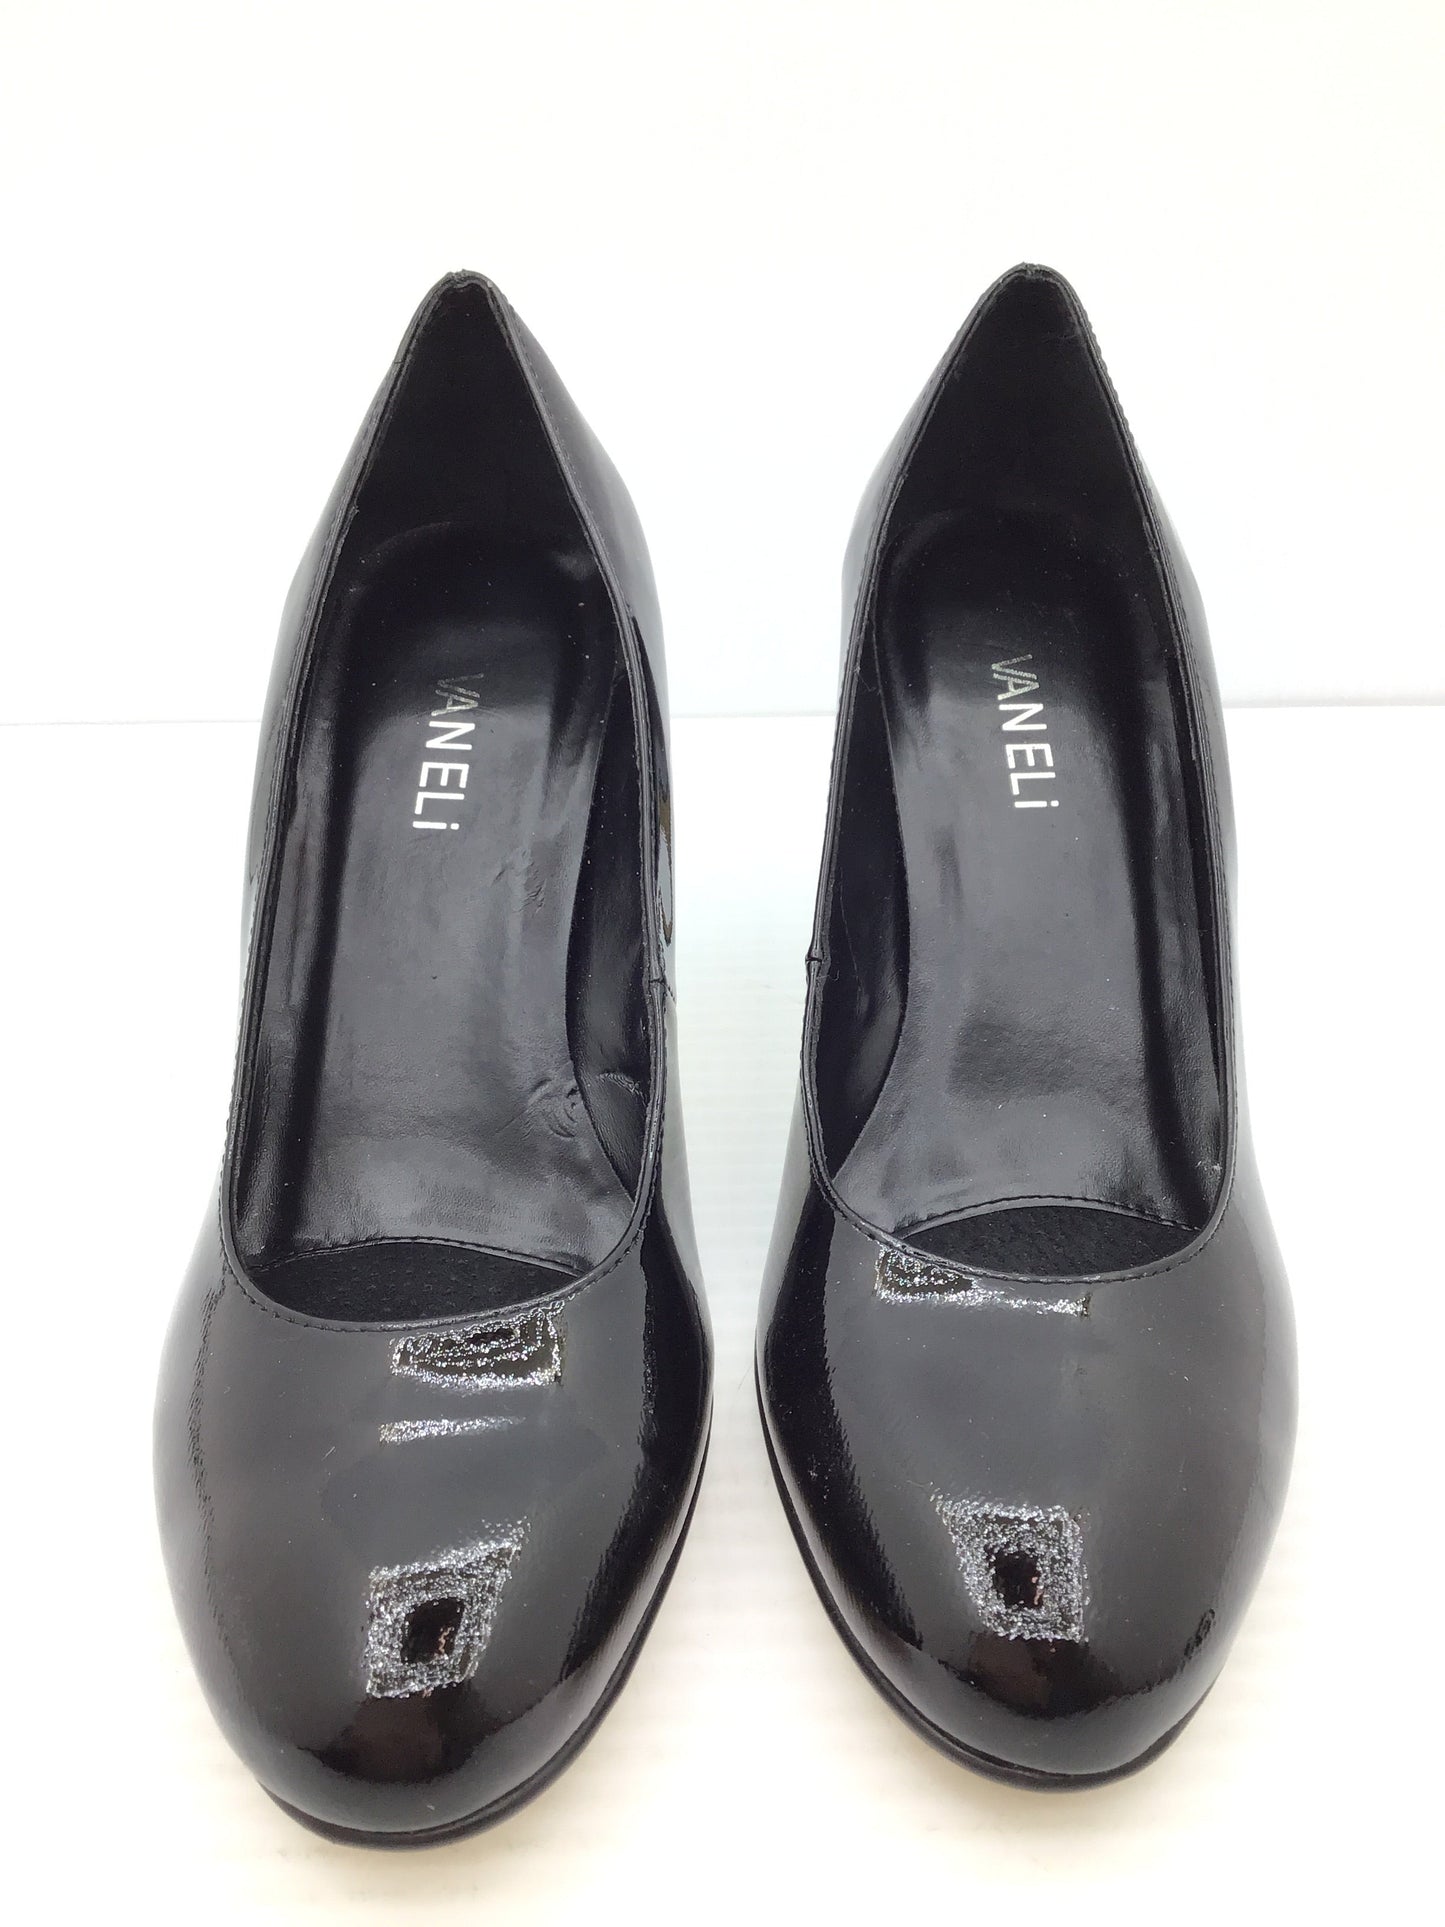 Shoes Heels Stiletto By Vaneli  Size: 8